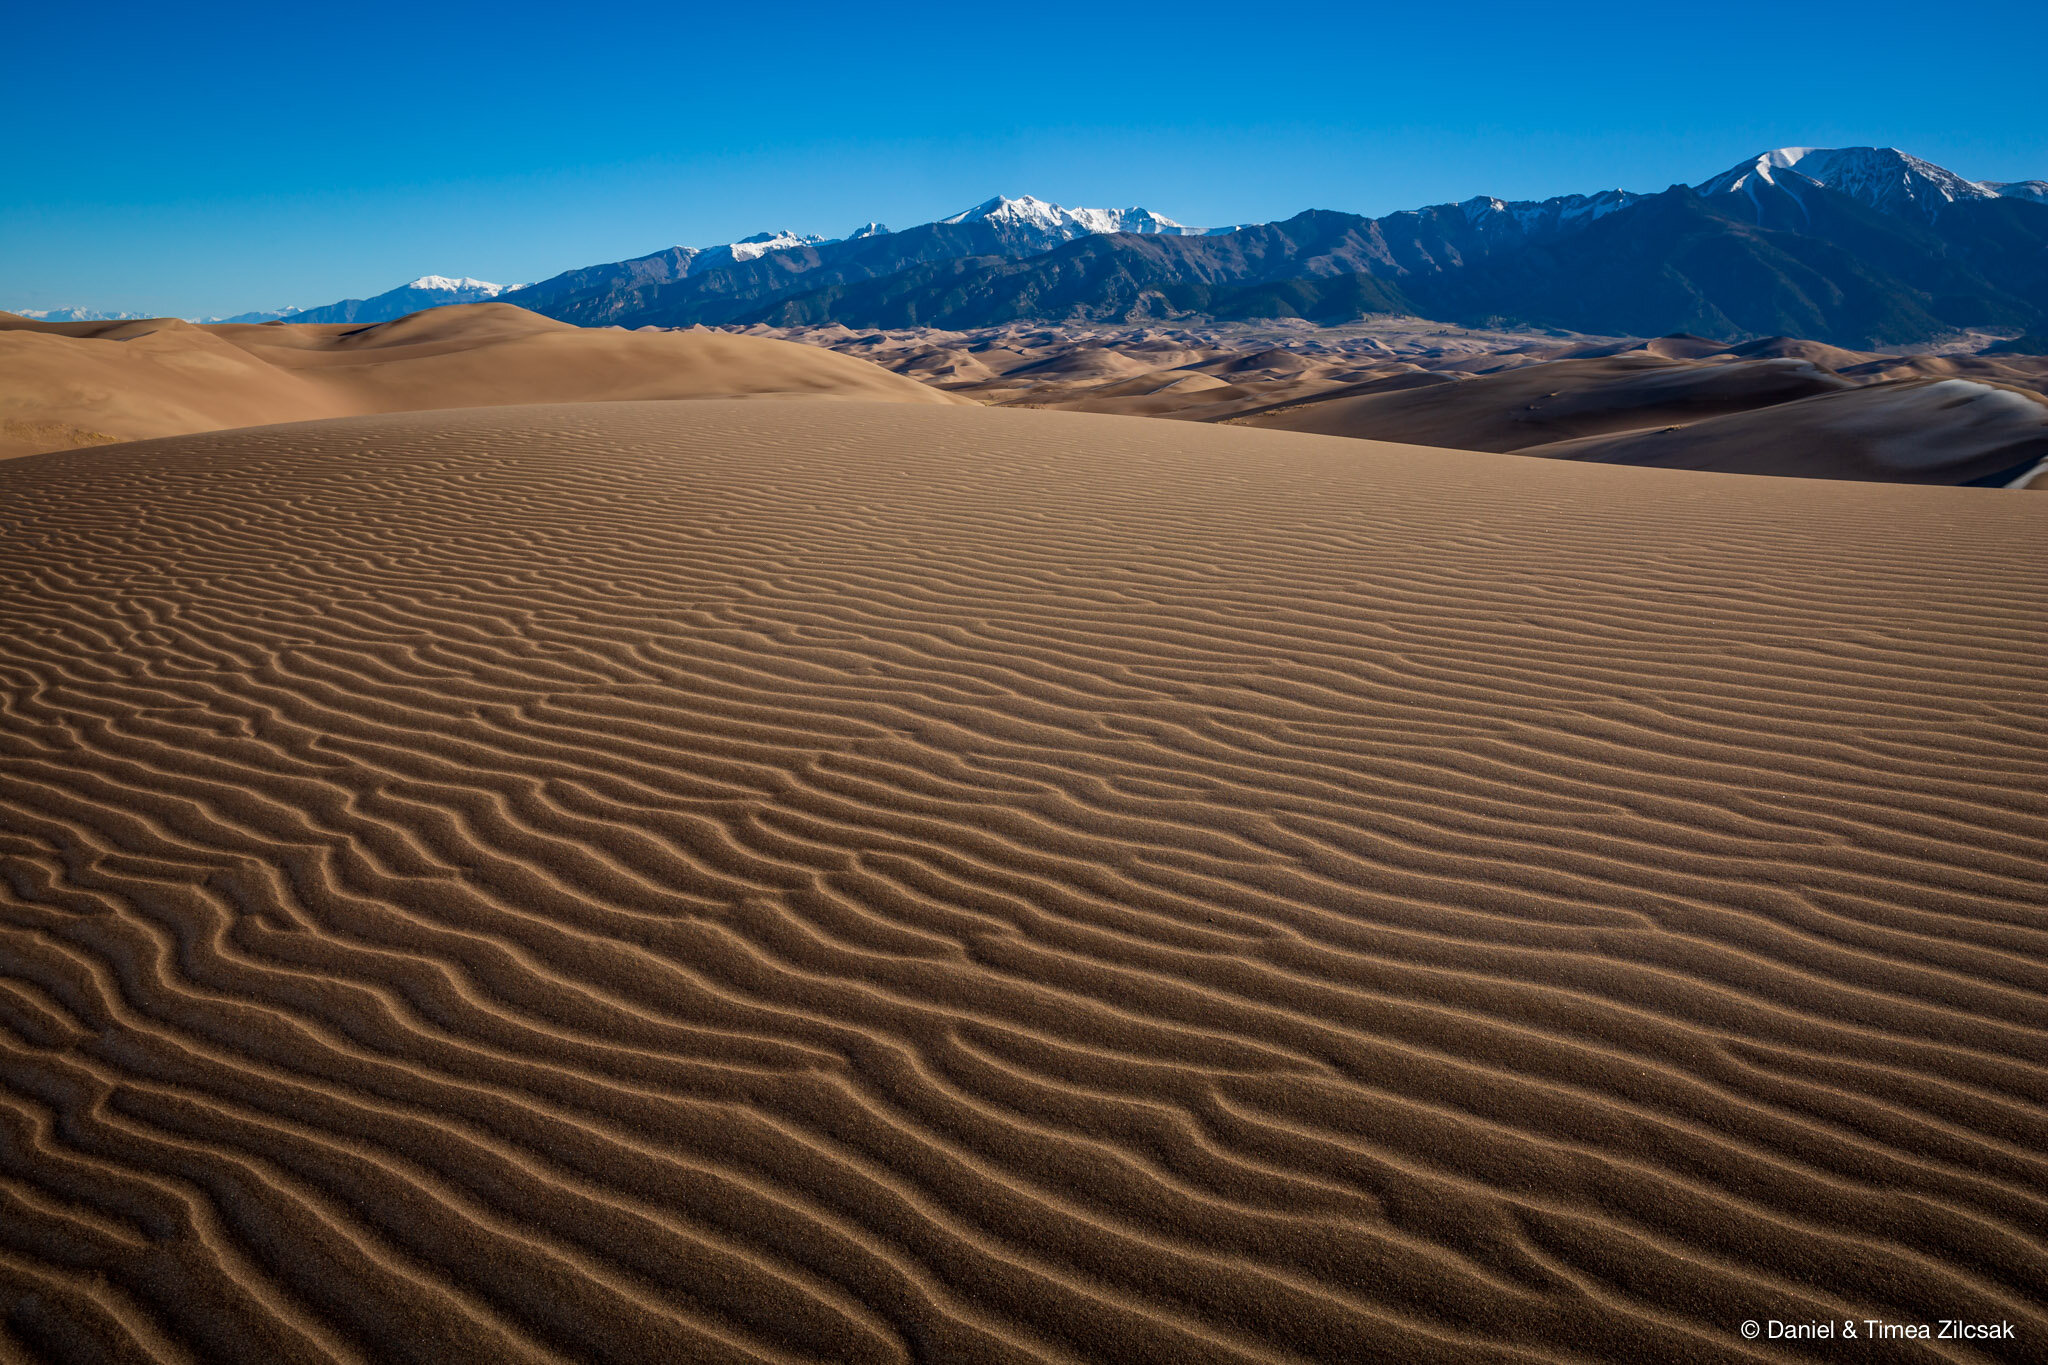 Great-Sand-Dunes-National-Park-9227.jpg